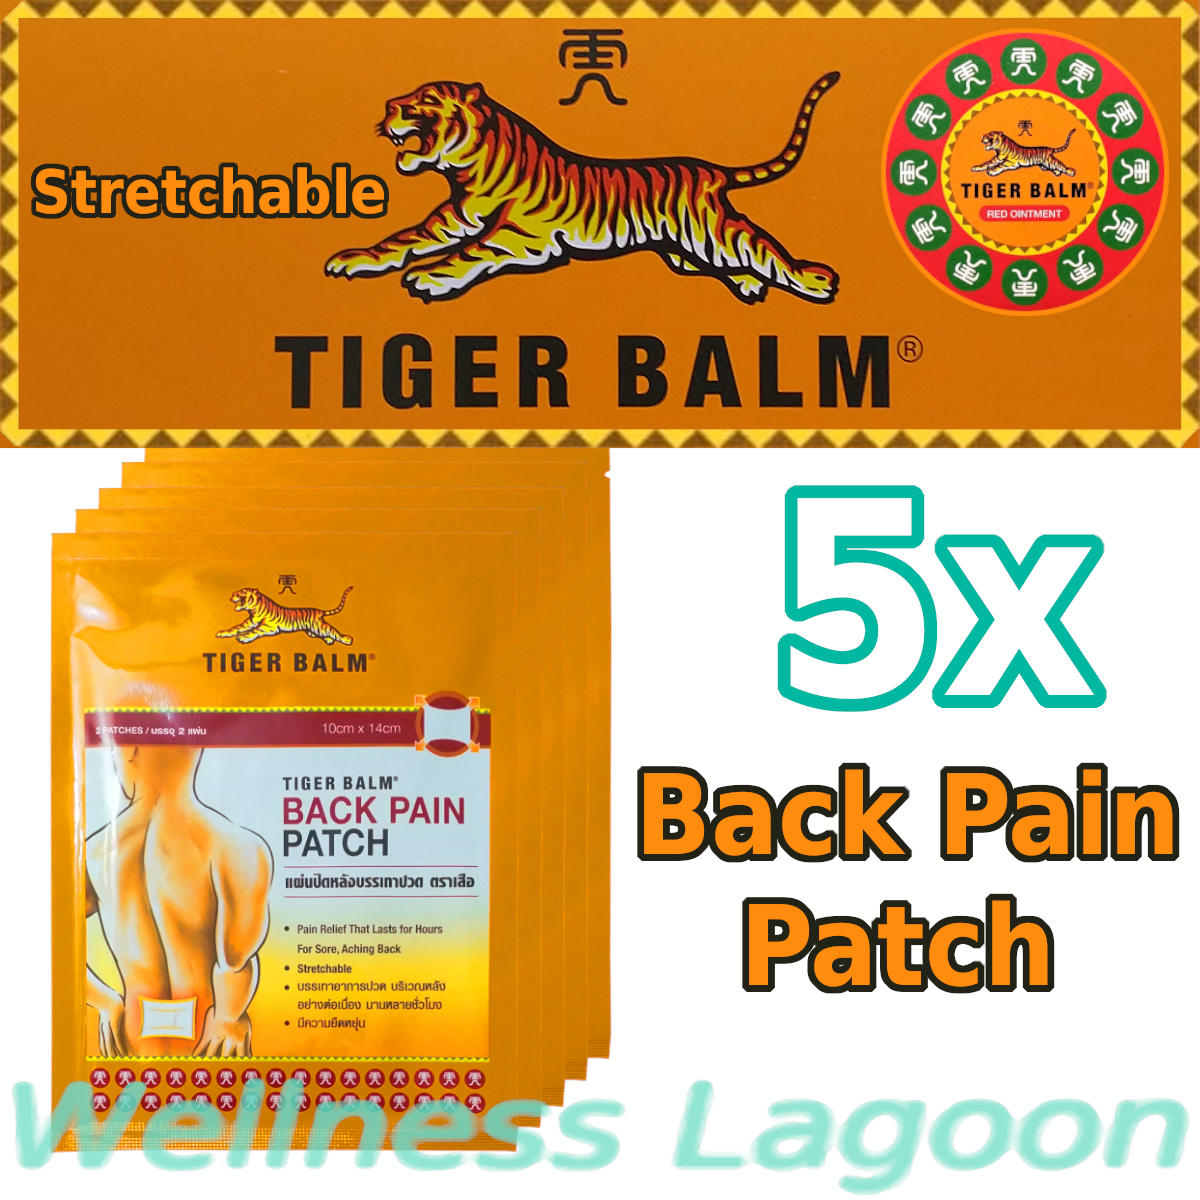 5x Tiger Balm Back Pain Patch - Stretchable (10cm x 14cm)